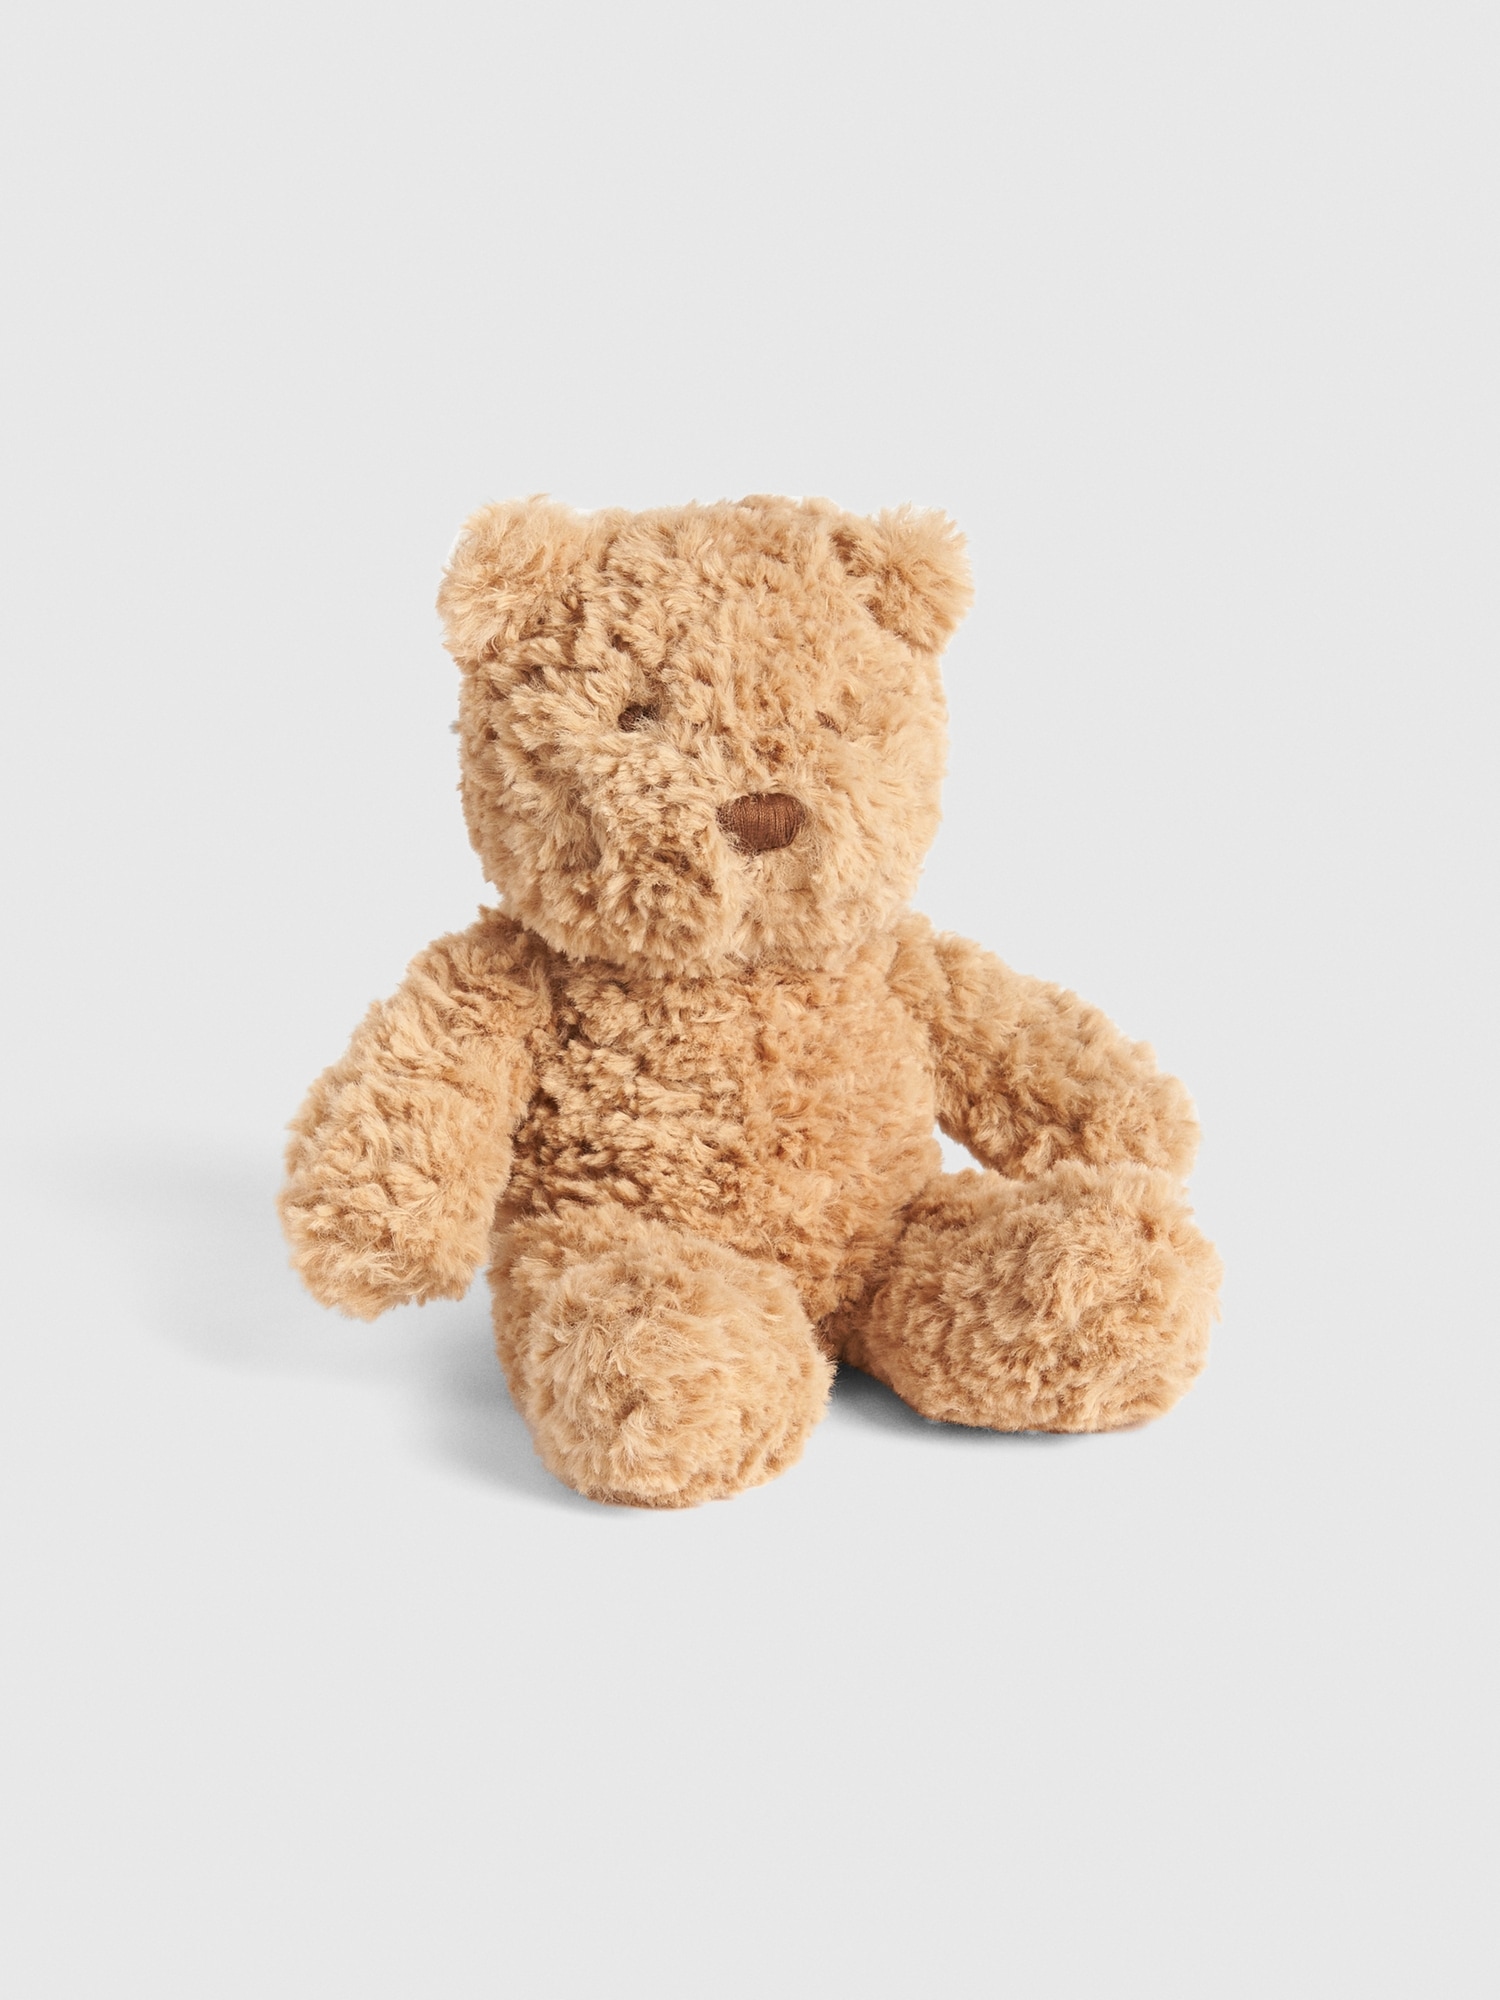 small teddy bear price